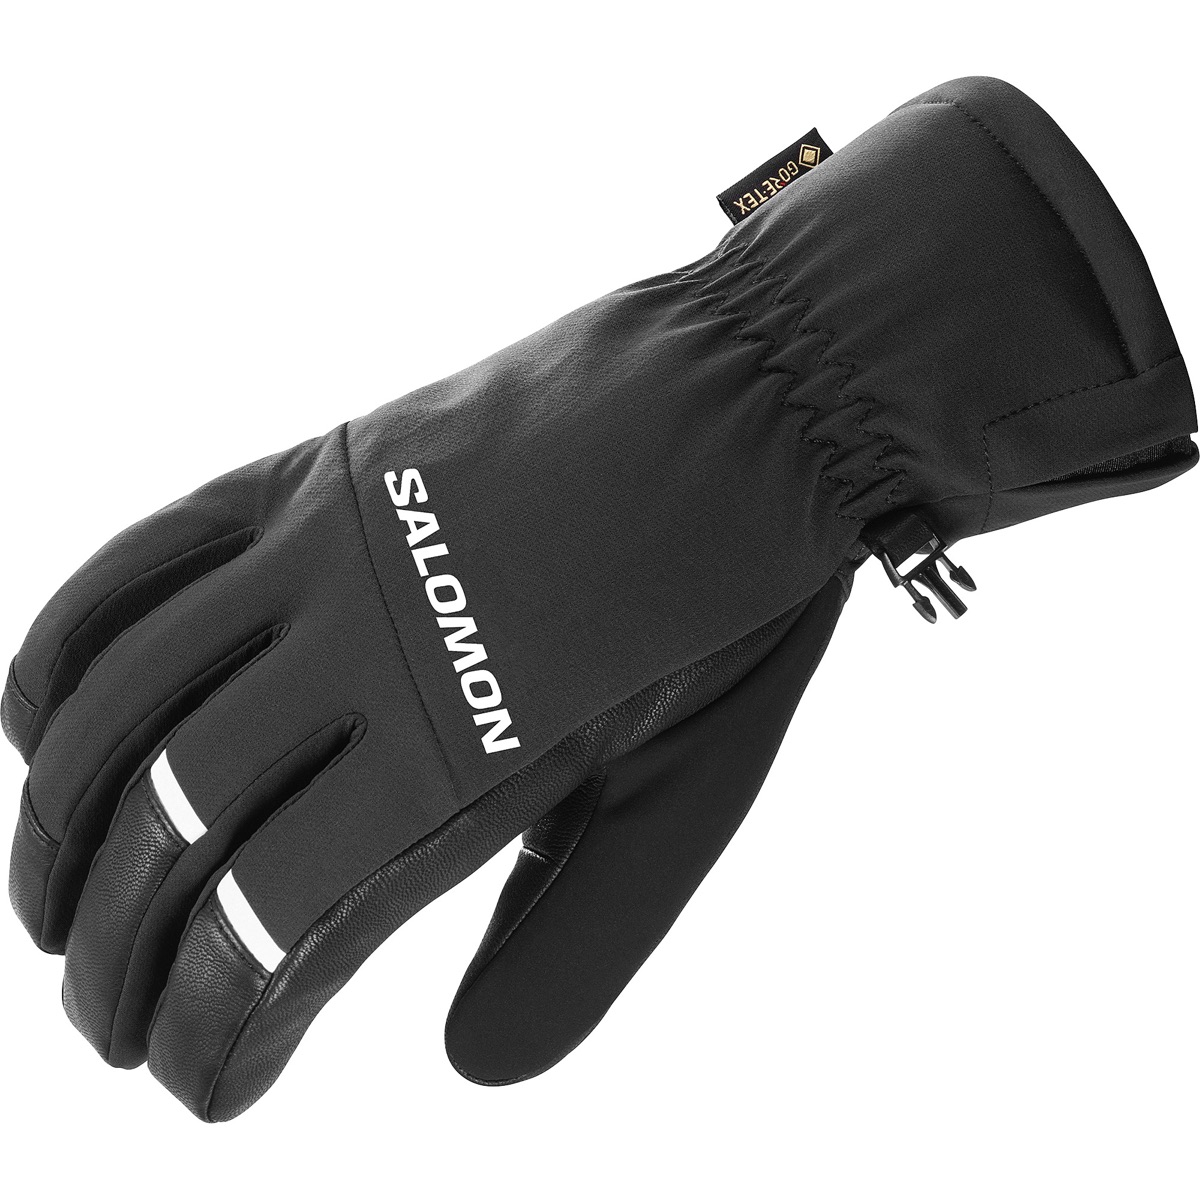 Salomon Unisex Gloves Propeller GORE-TEX Black/Black | Buy Salomon Unisex  Gloves Propeller GORE-TEX Black/Black here | Outnorth